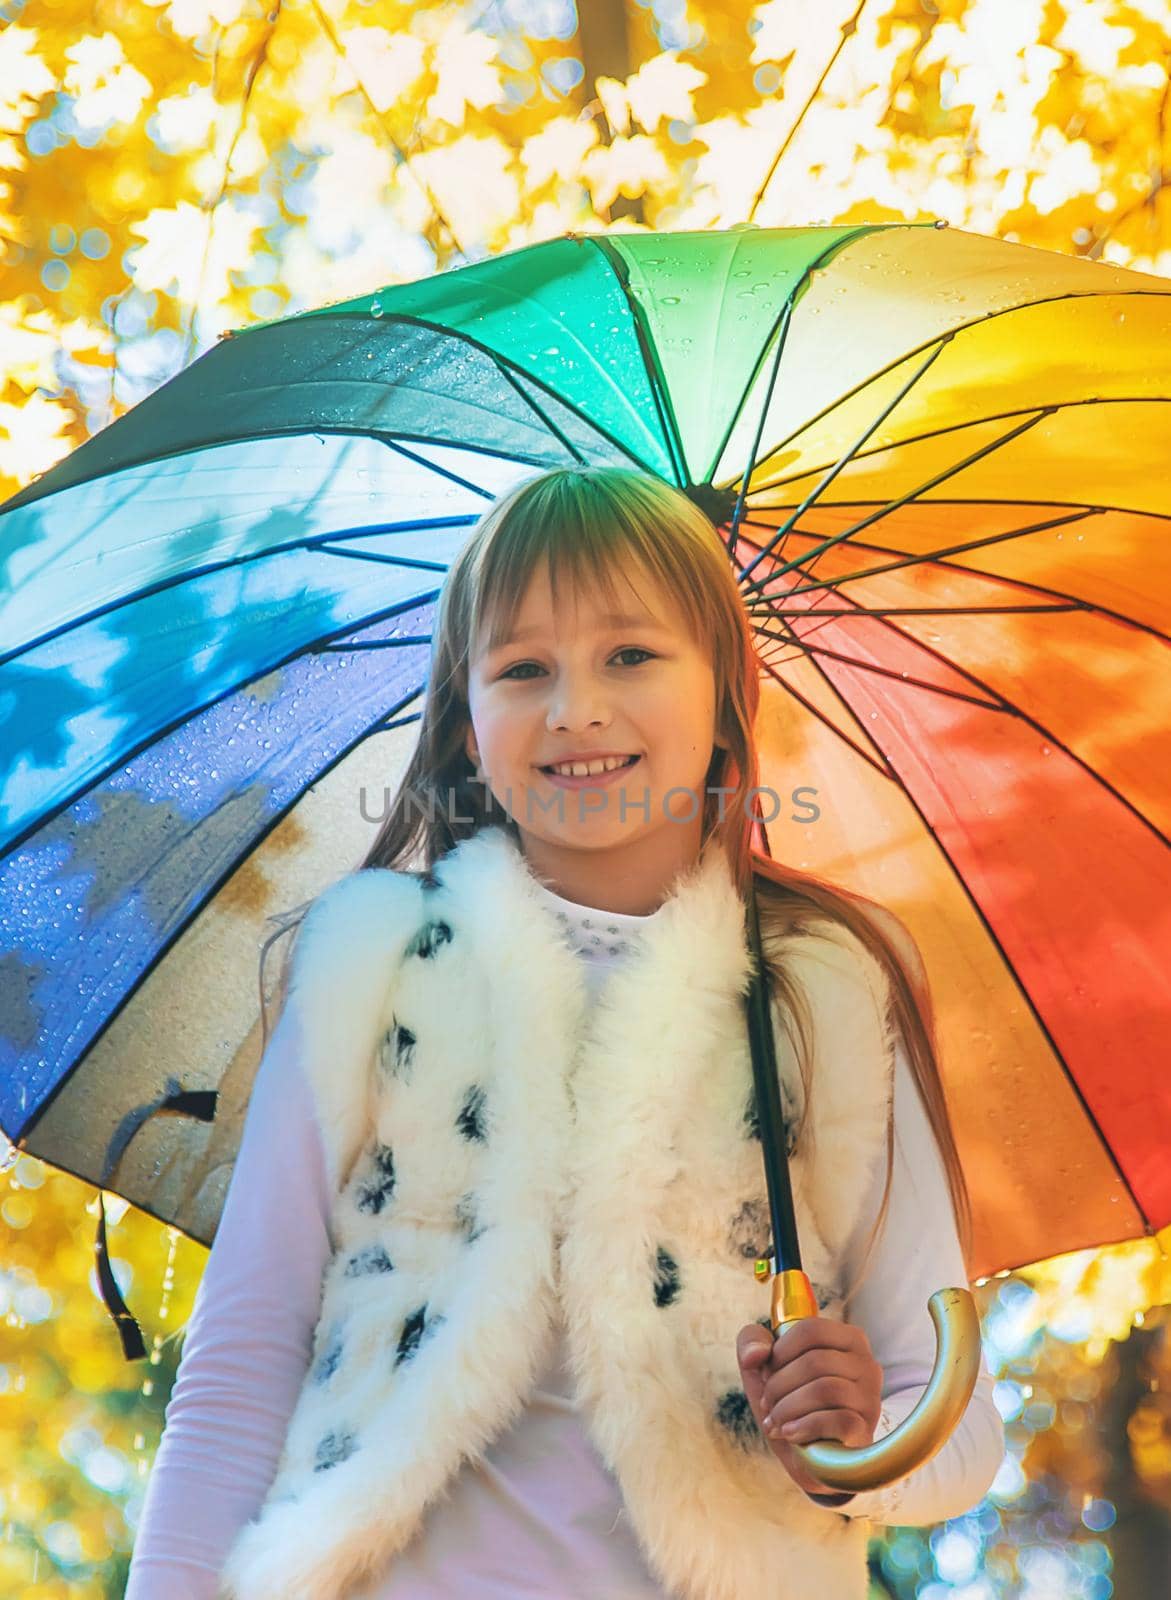 Child under an umbrella in the autumn park. Selective focus. by yanadjana